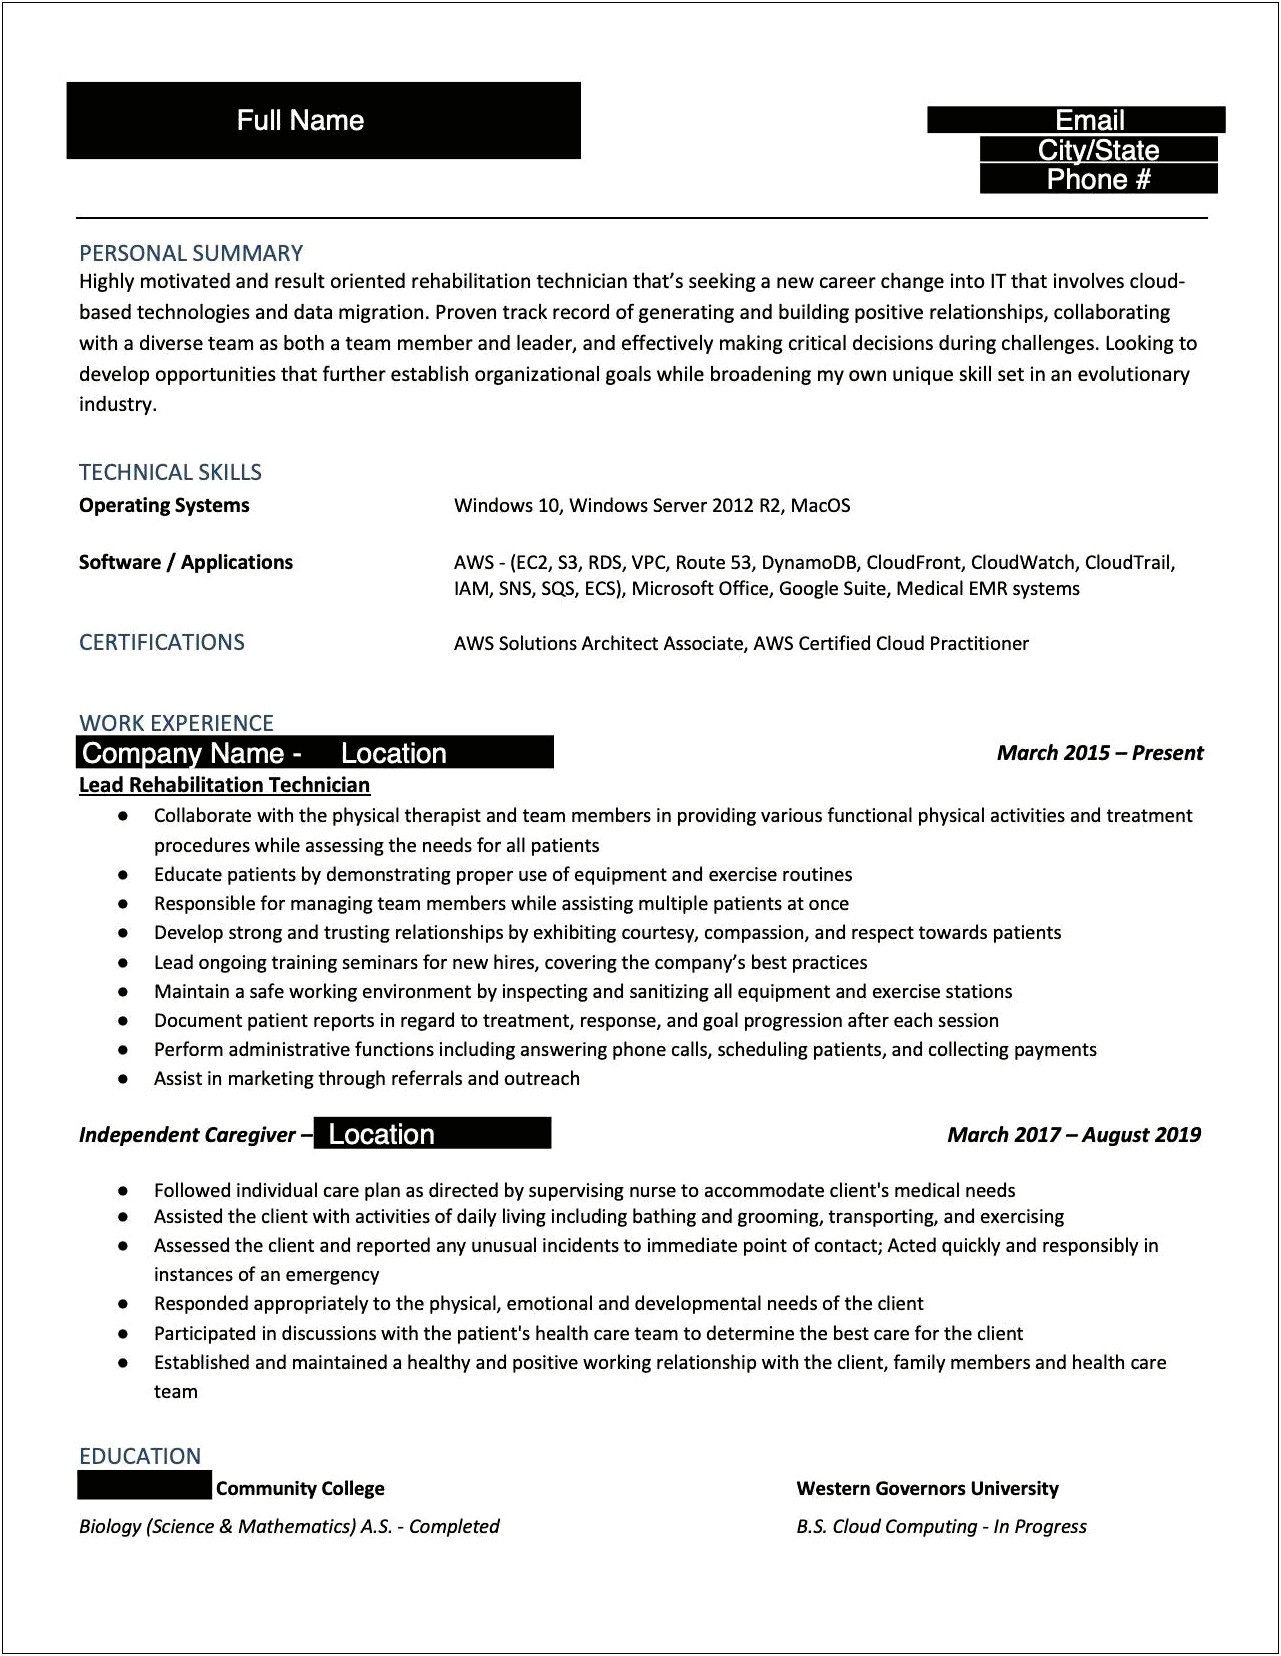 Prior Job Experience Summary On A Resume